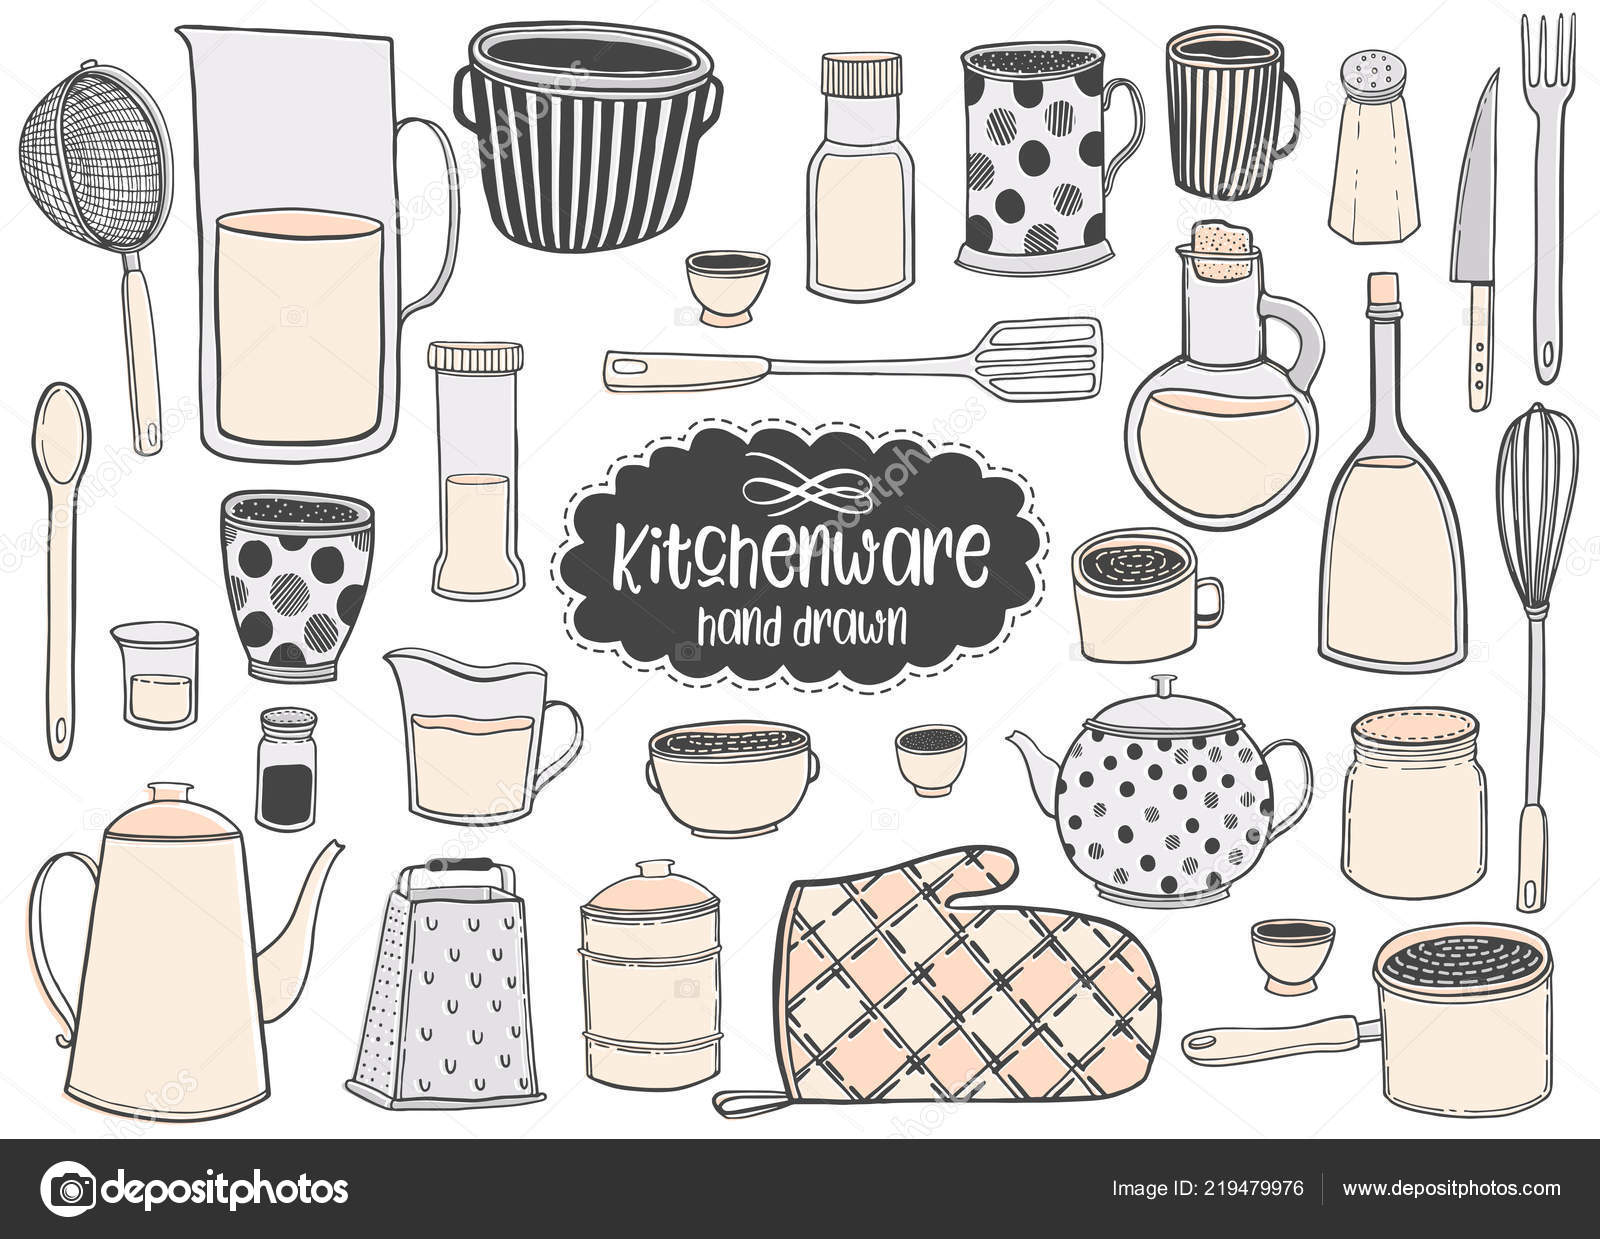 https://st4.depositphotos.com/15550956/21947/v/1600/depositphotos_219479976-stock-illustration-set-kitchenware-utensils-hand-drawn.jpg